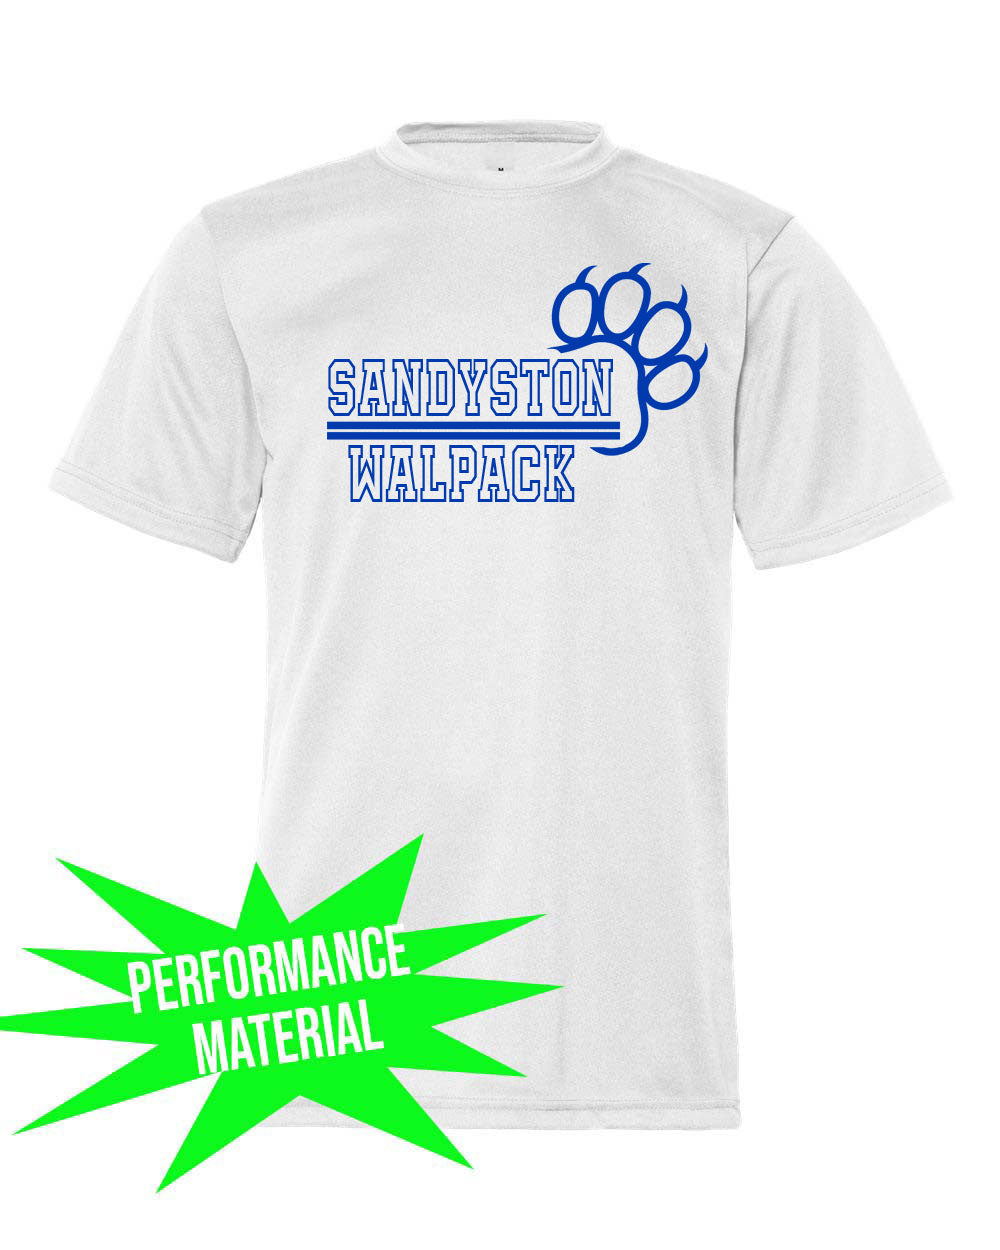 Sandyston Walpack Performance Material T-Shirt Design 16